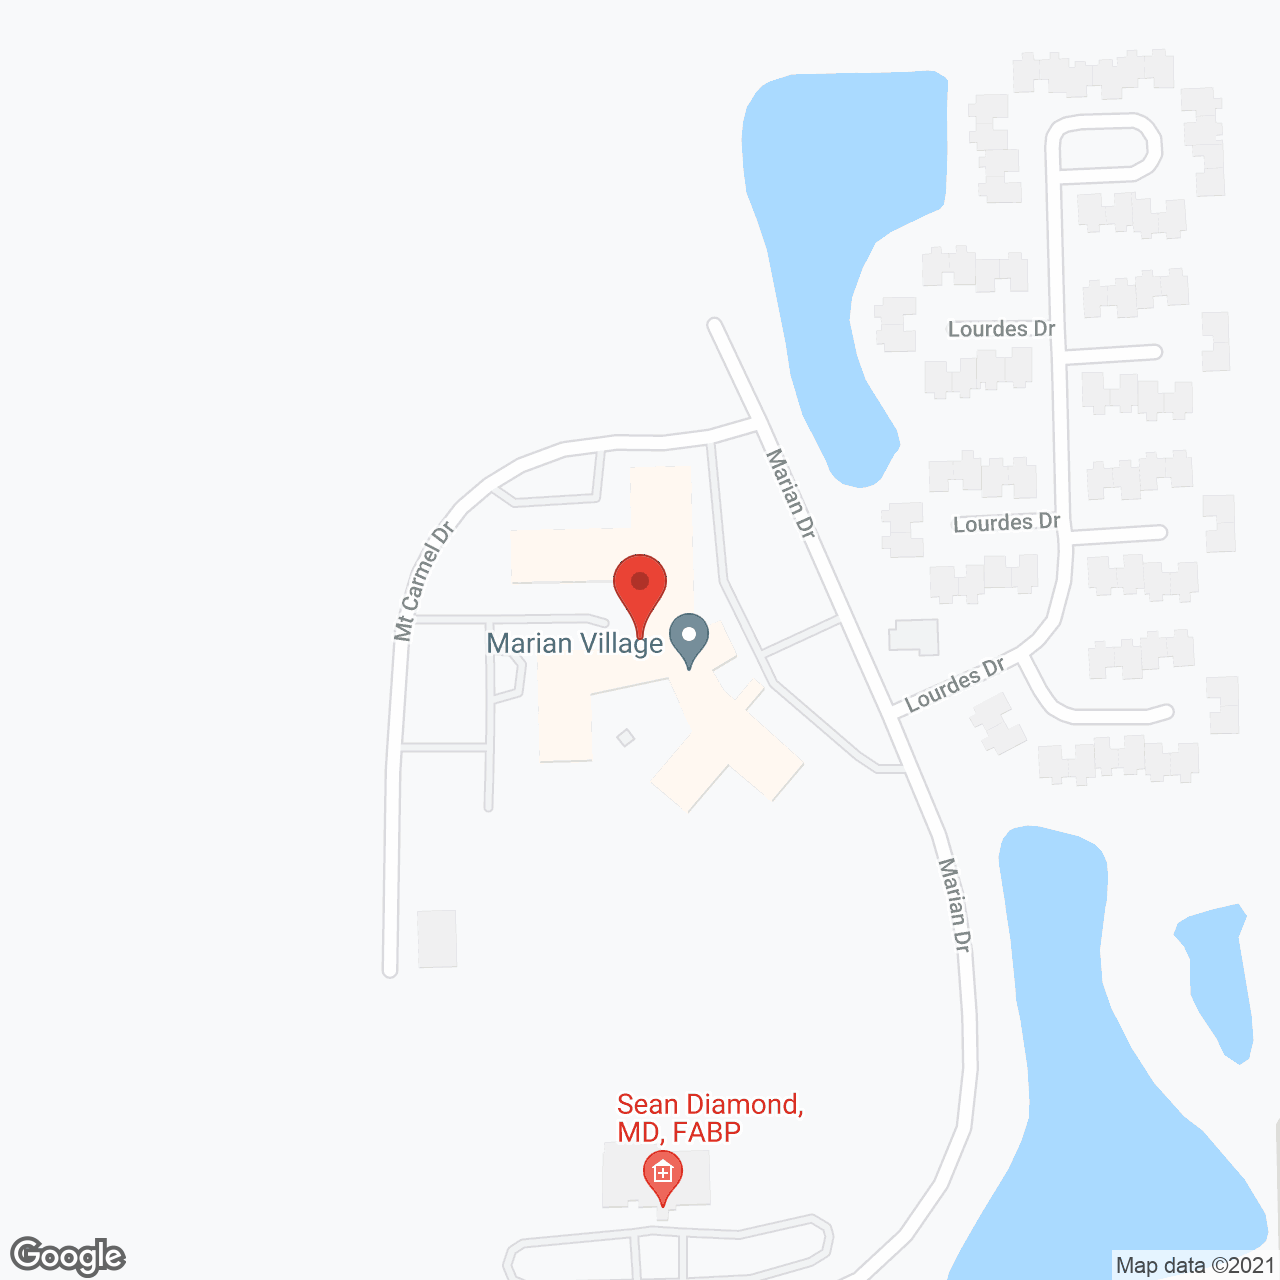 Marian Village in google map